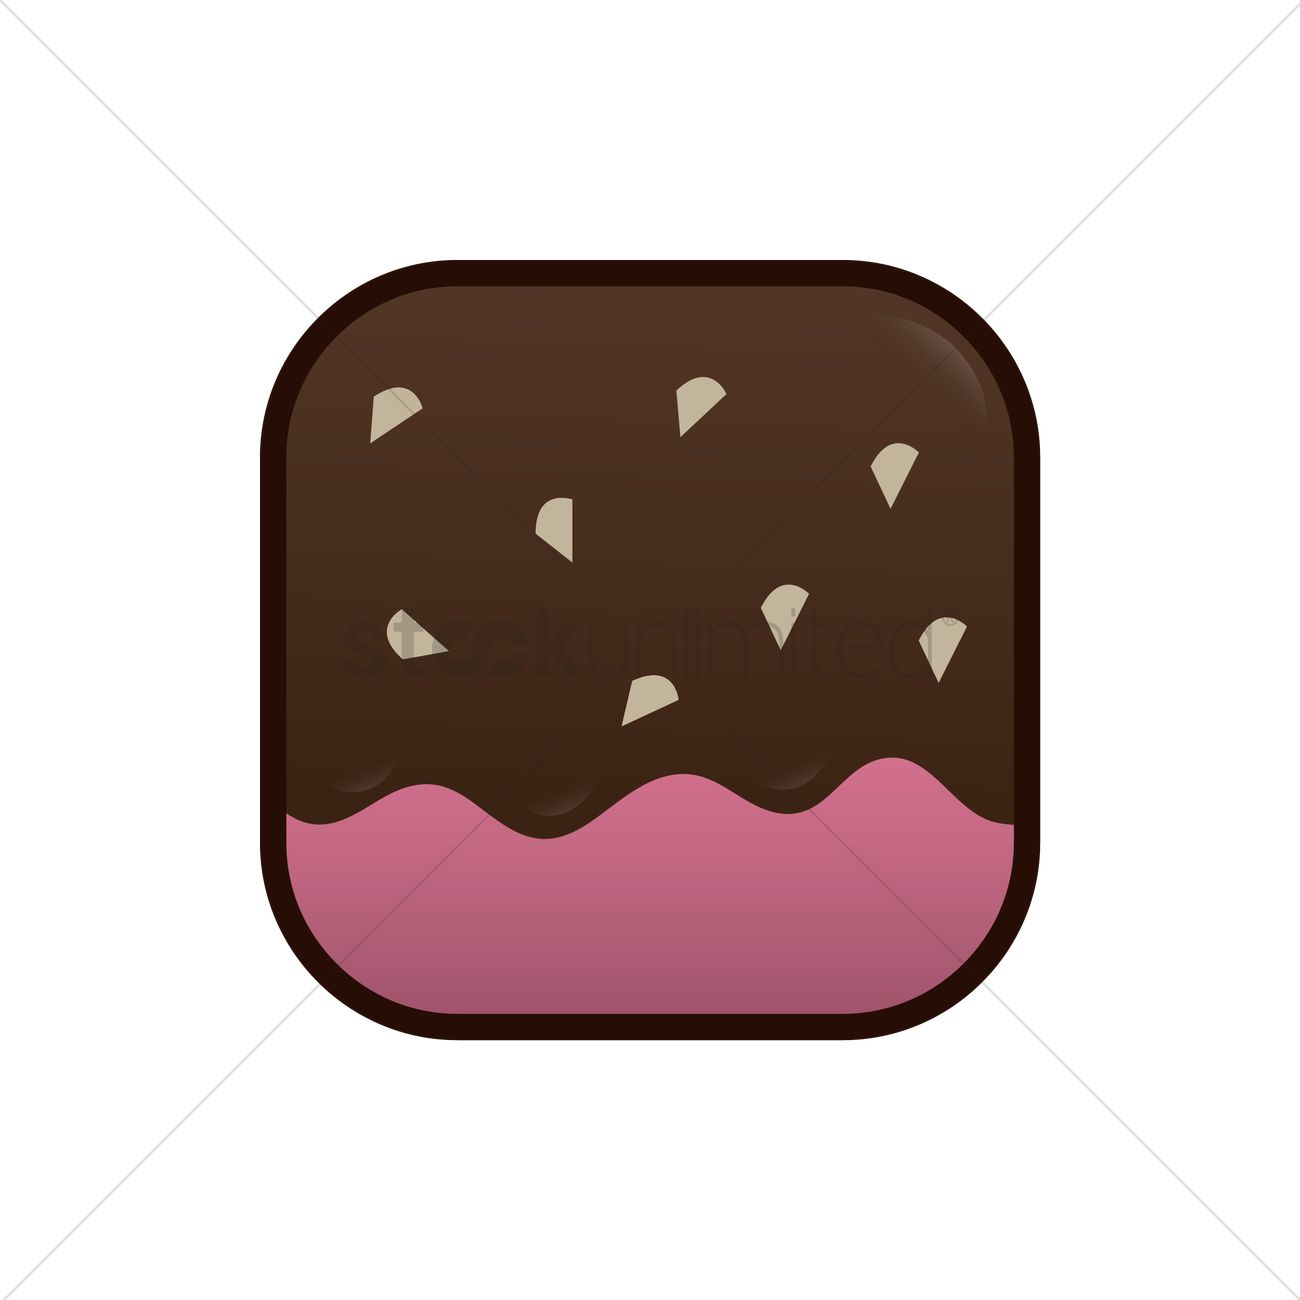 Ice cream bar with chocolate coating Vector Image.